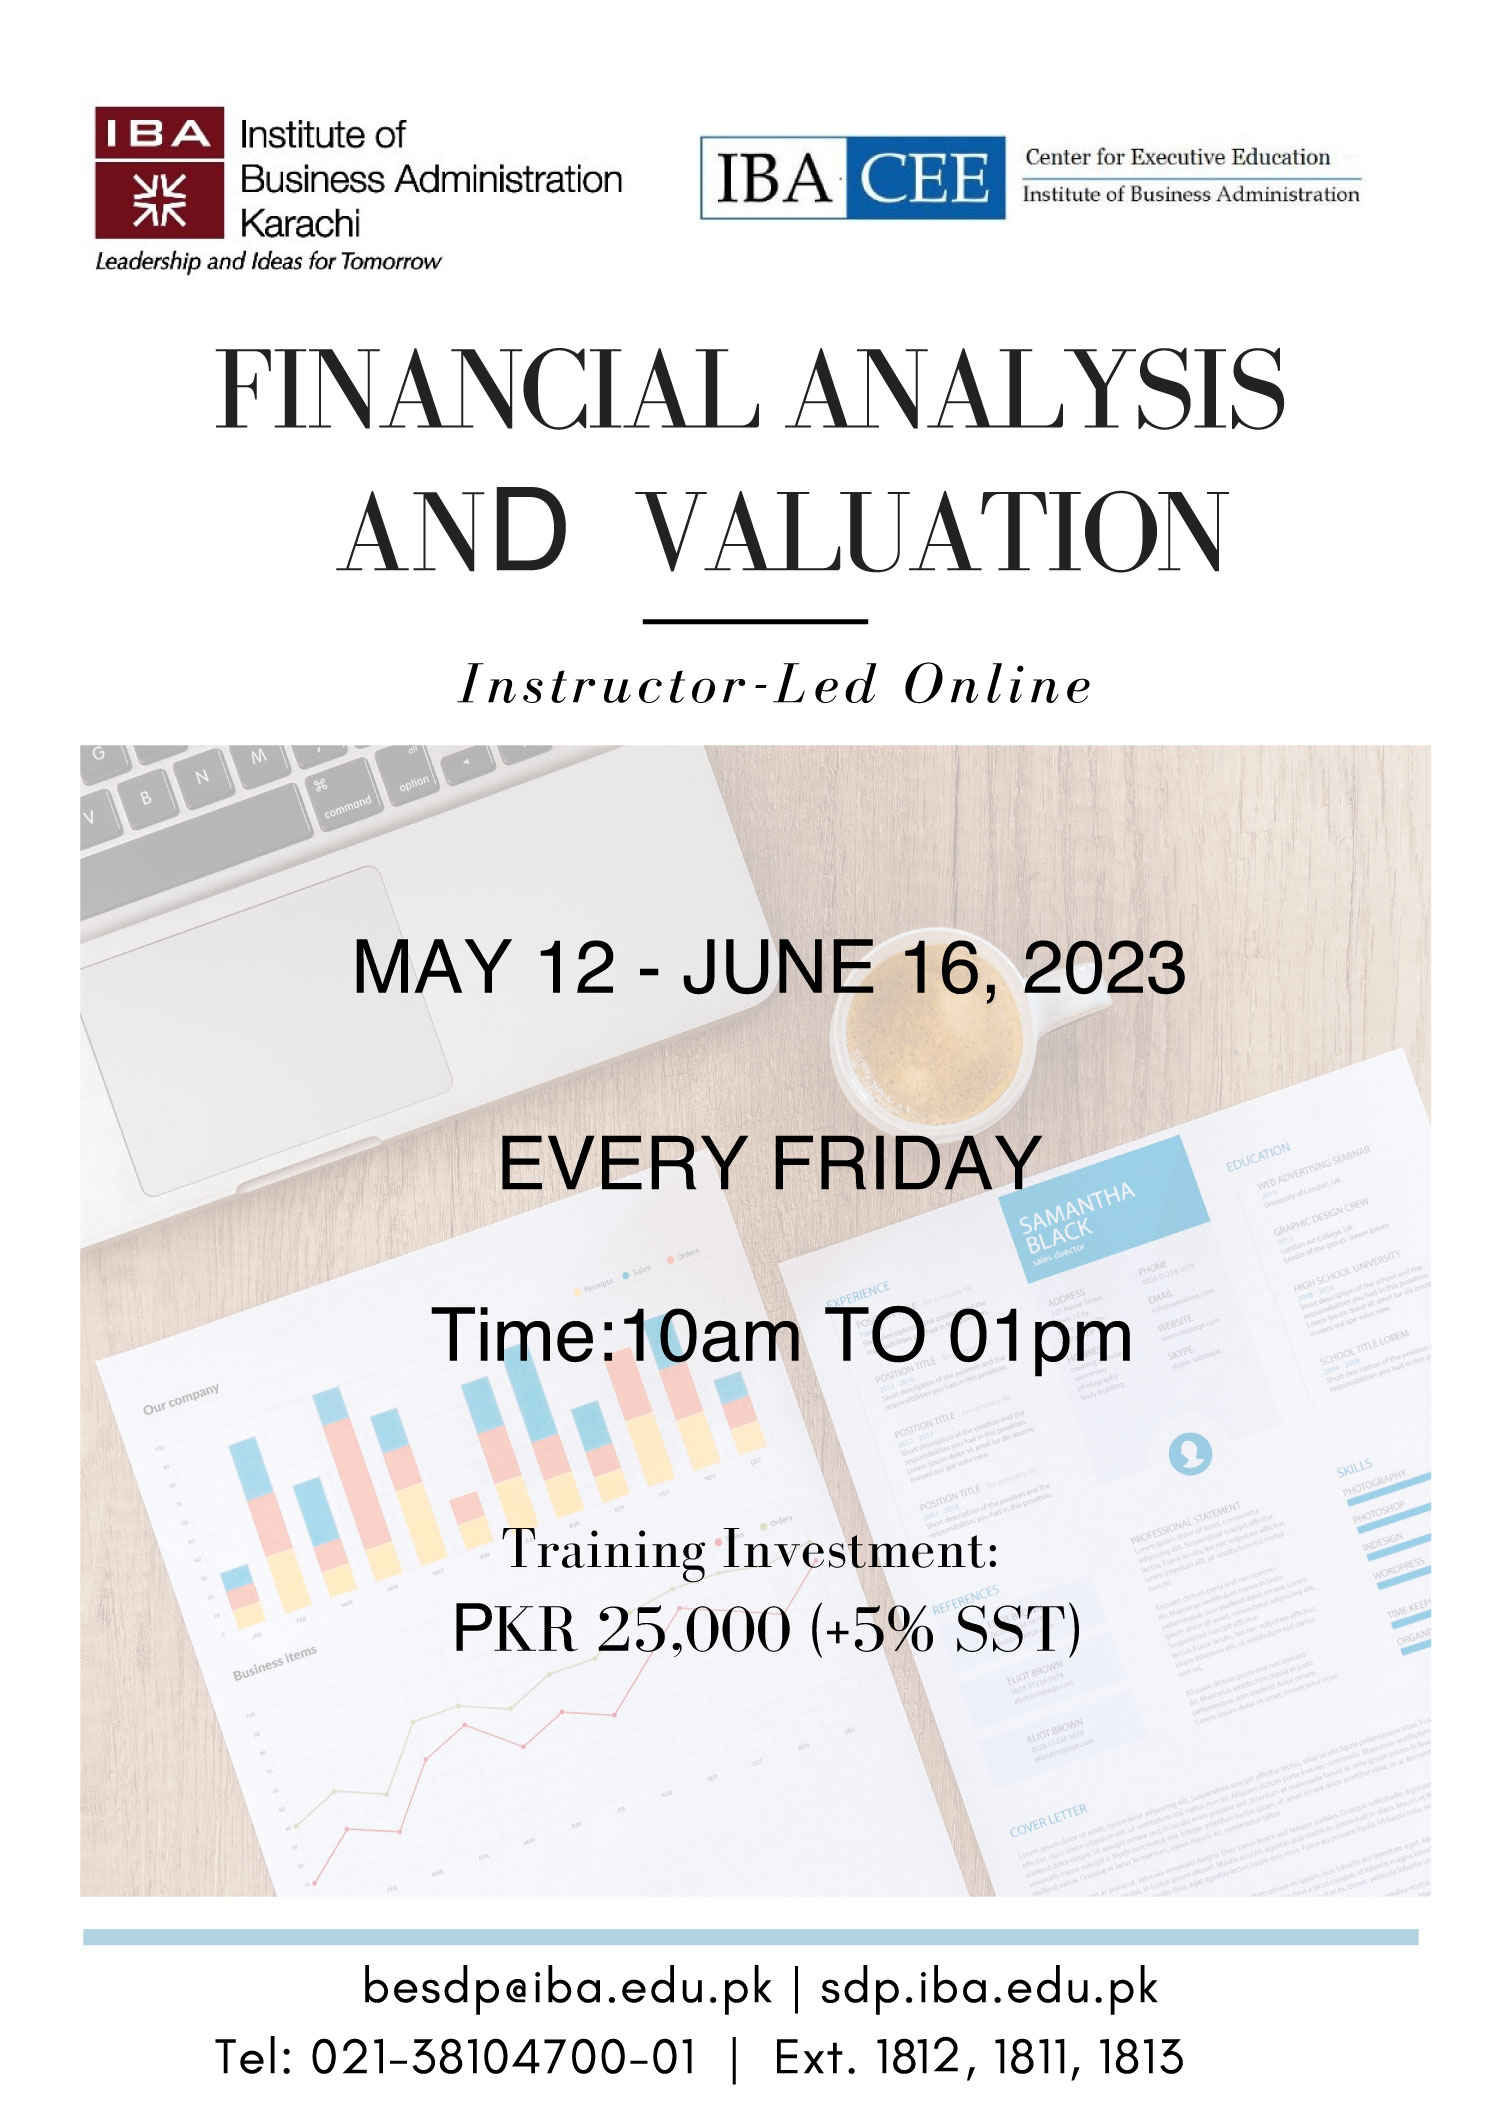 Financial Analysis & Valuation Skill sets